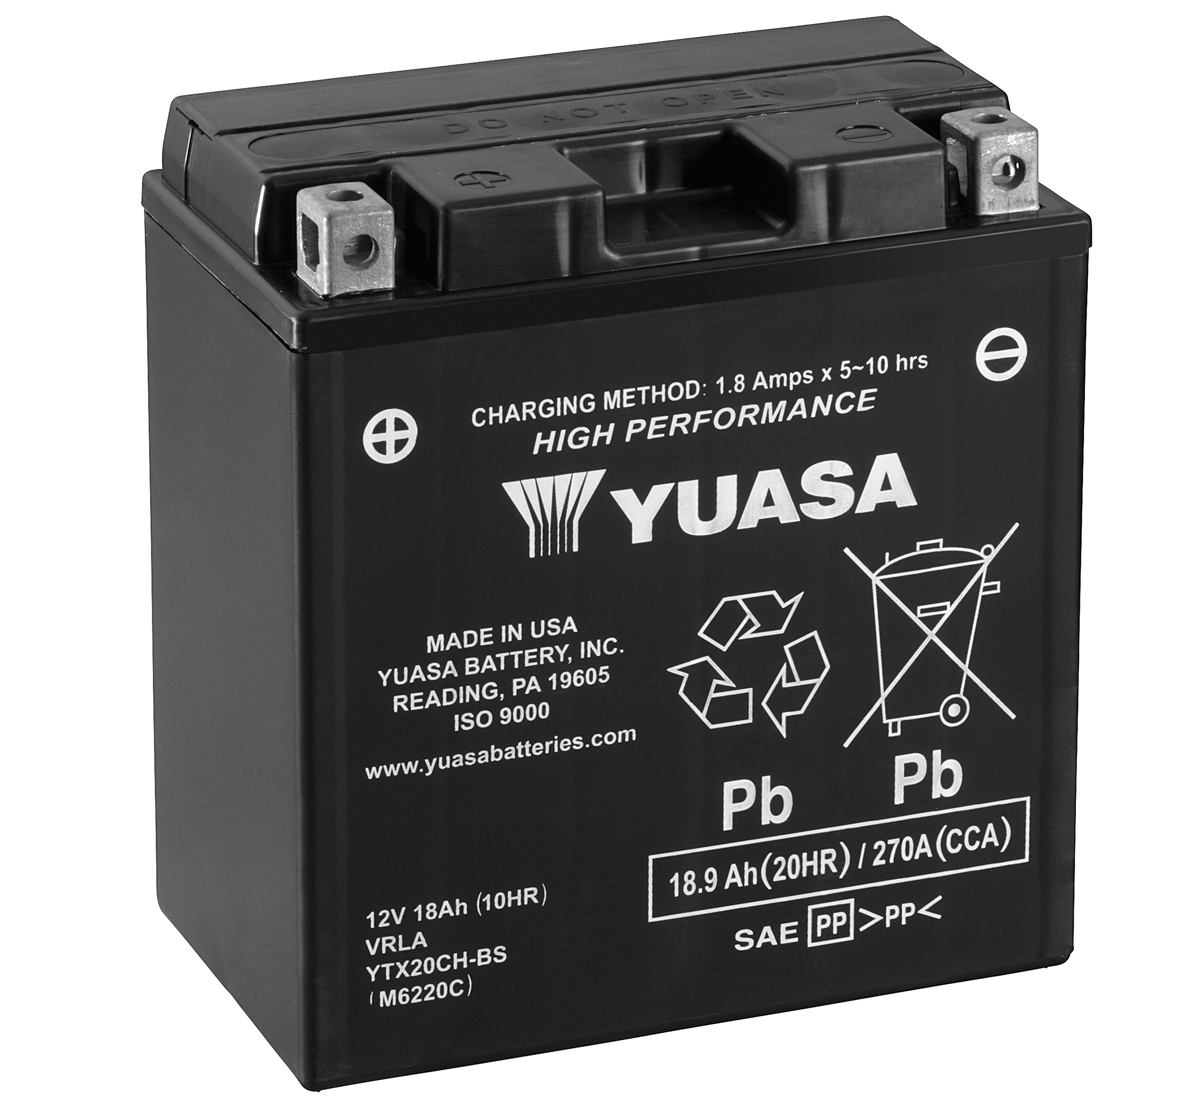 Yuasa YTX20CH-BS 12V Motorcycle Battery